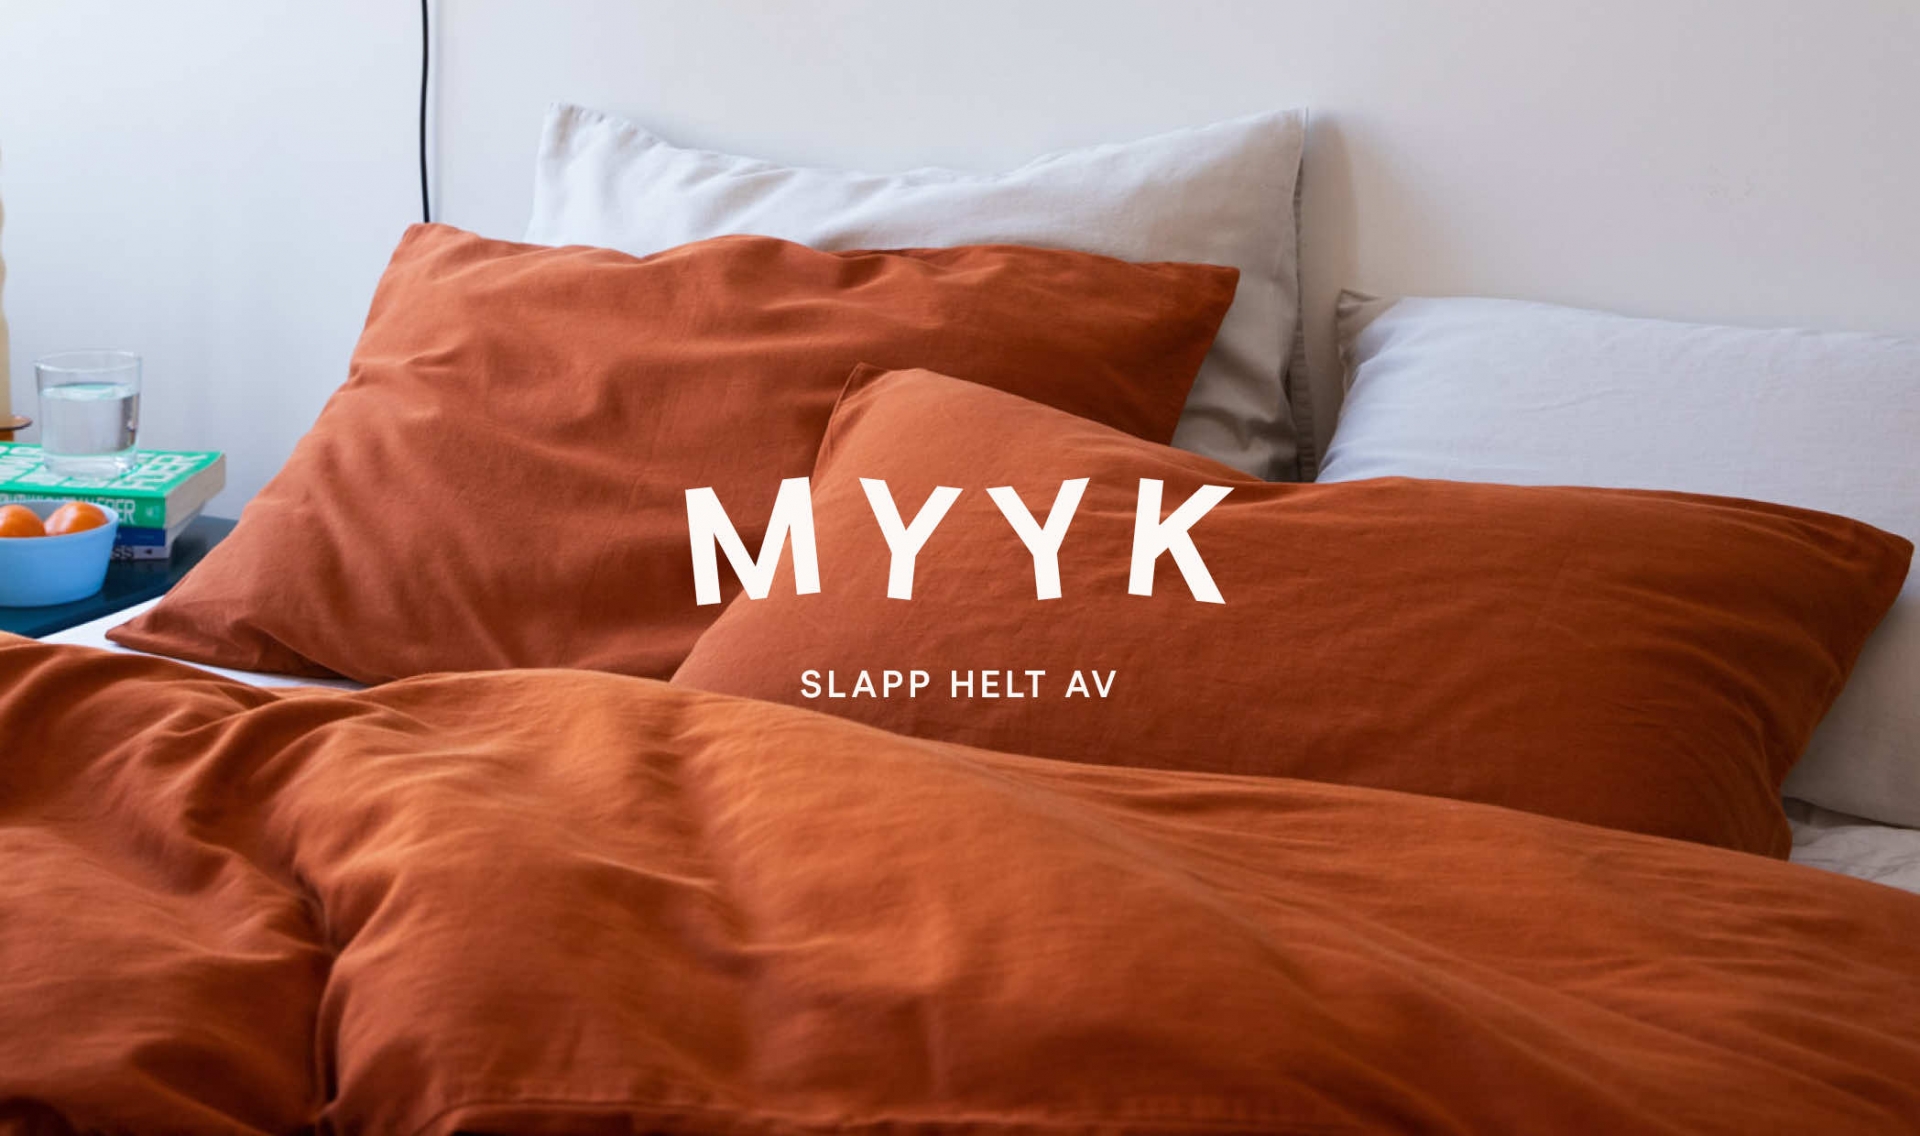 MYYK – 25 x vekst på seks måneder